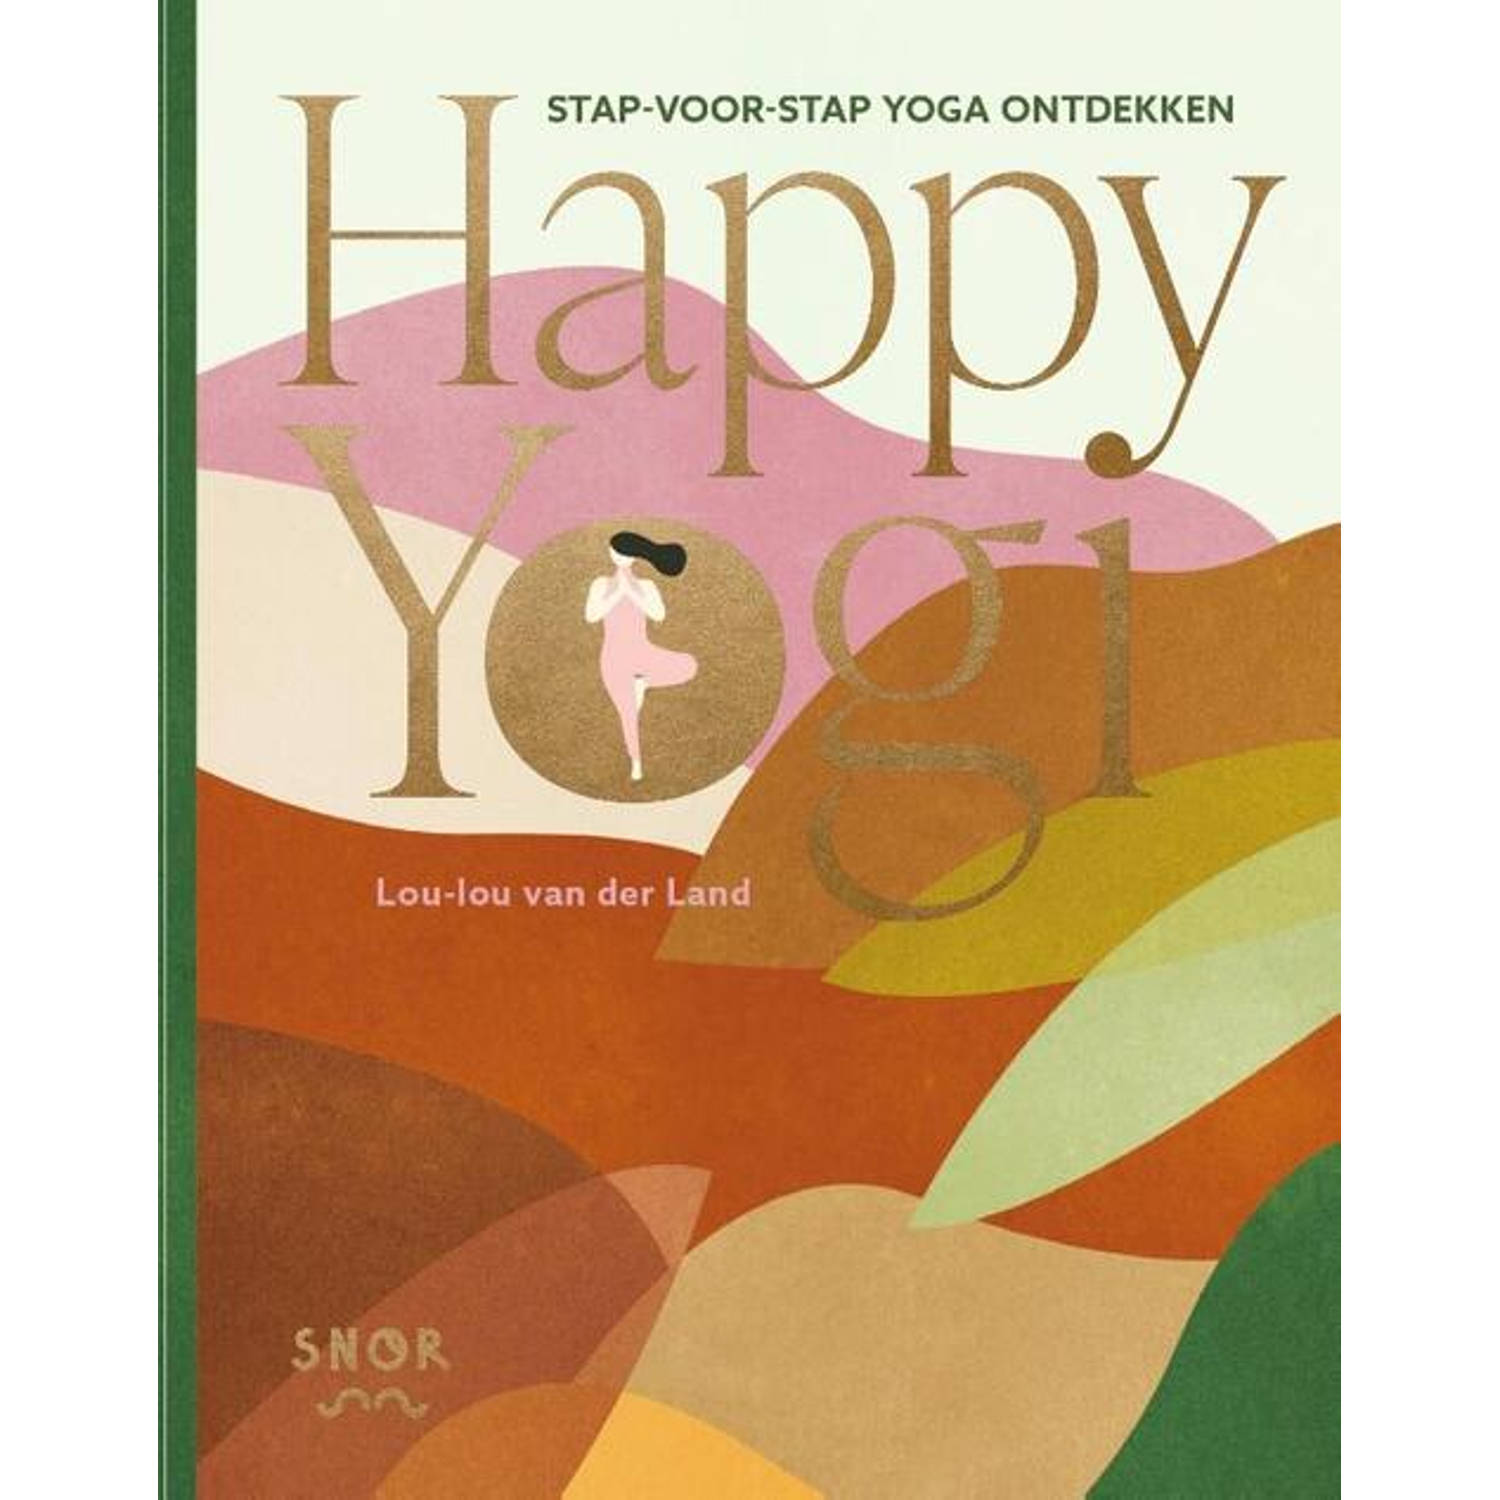 Happy Yogi